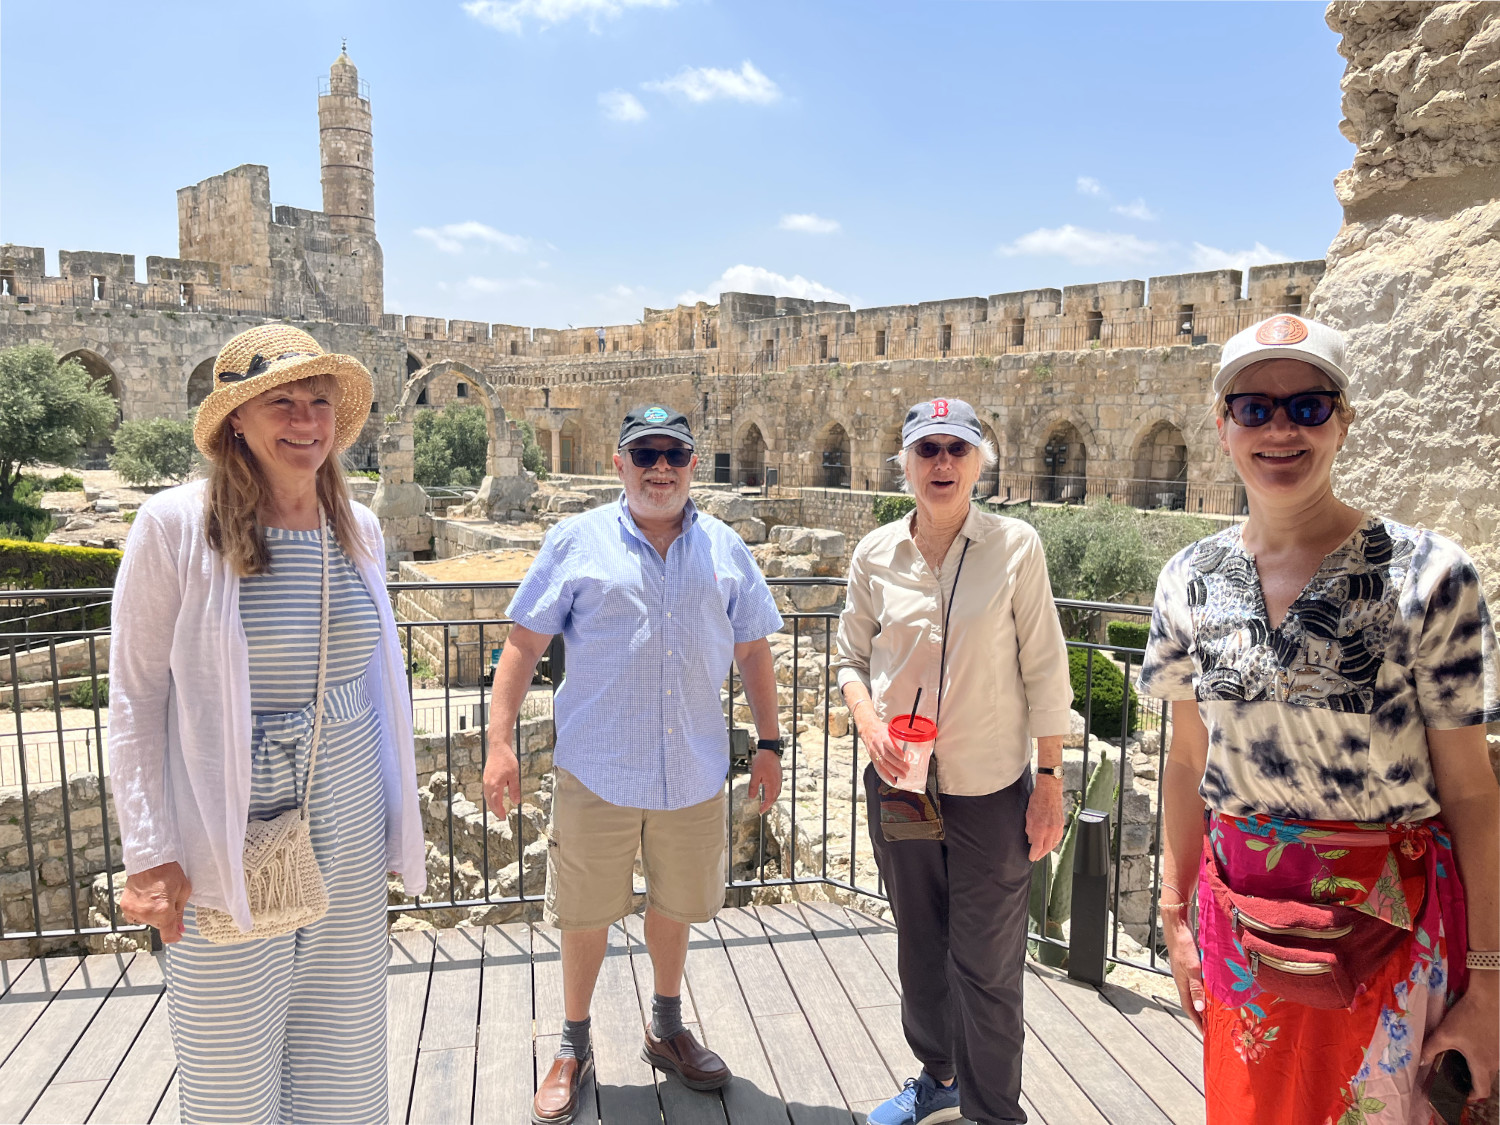 At King David's Castle